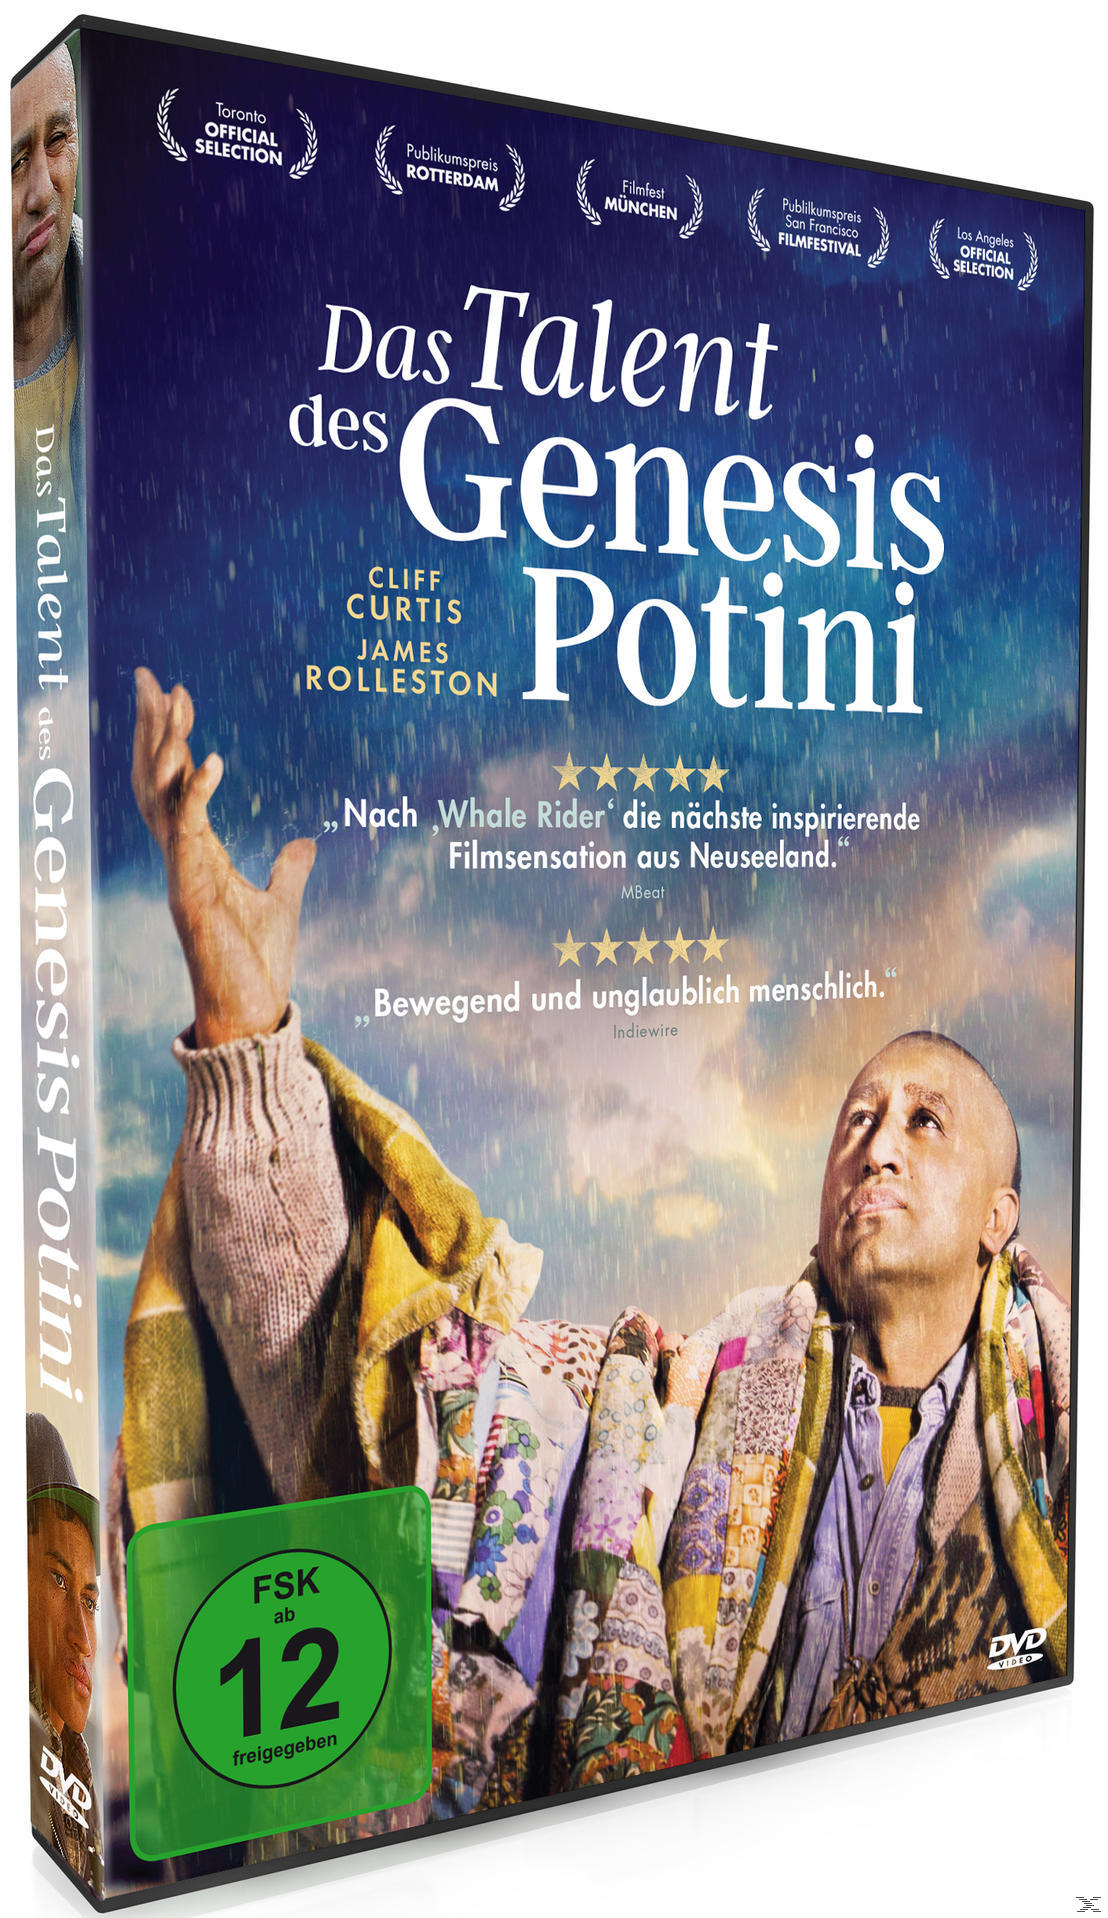 Das Talent des DVD Potini Genesis